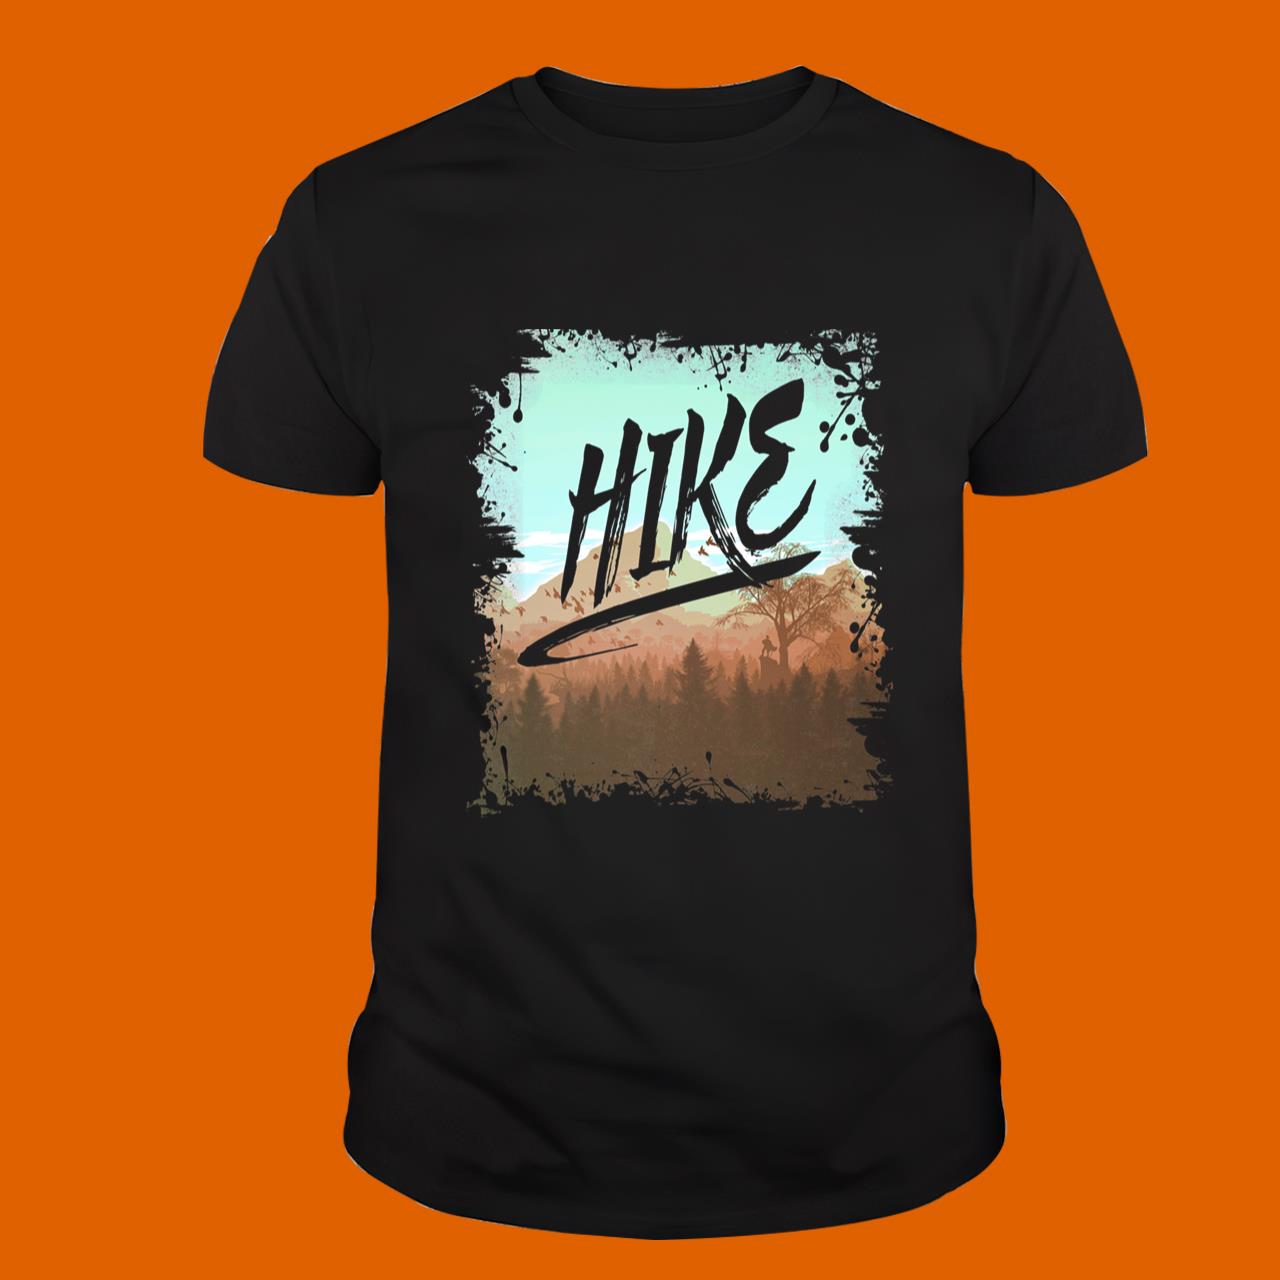 HIKE – I Love Hiking T-Shirt